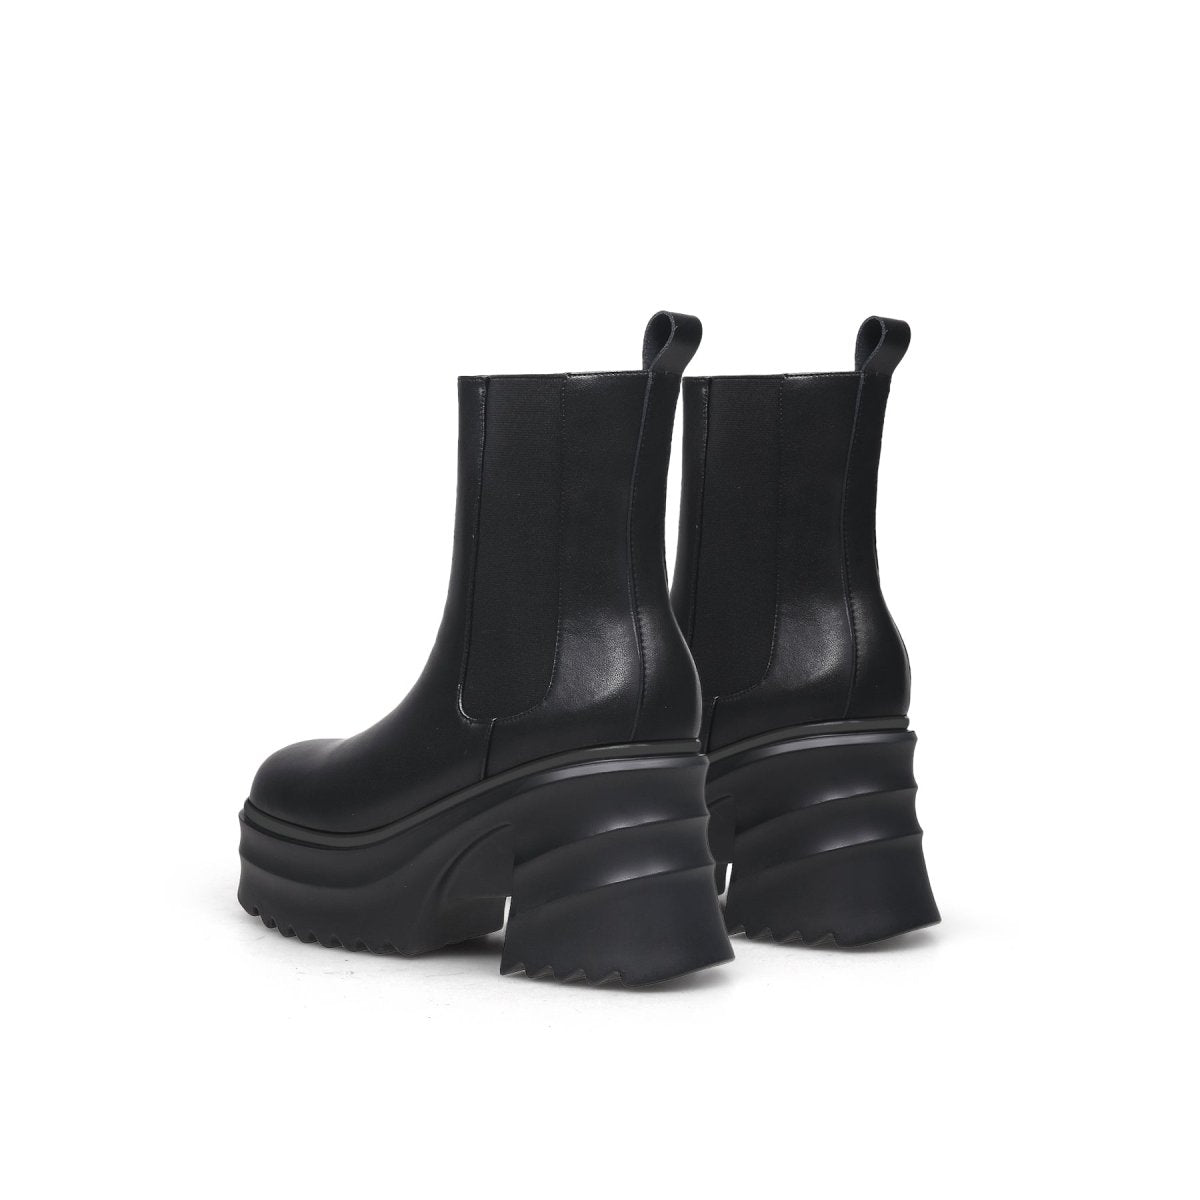 Comfort Zone Black Boots - 0cm